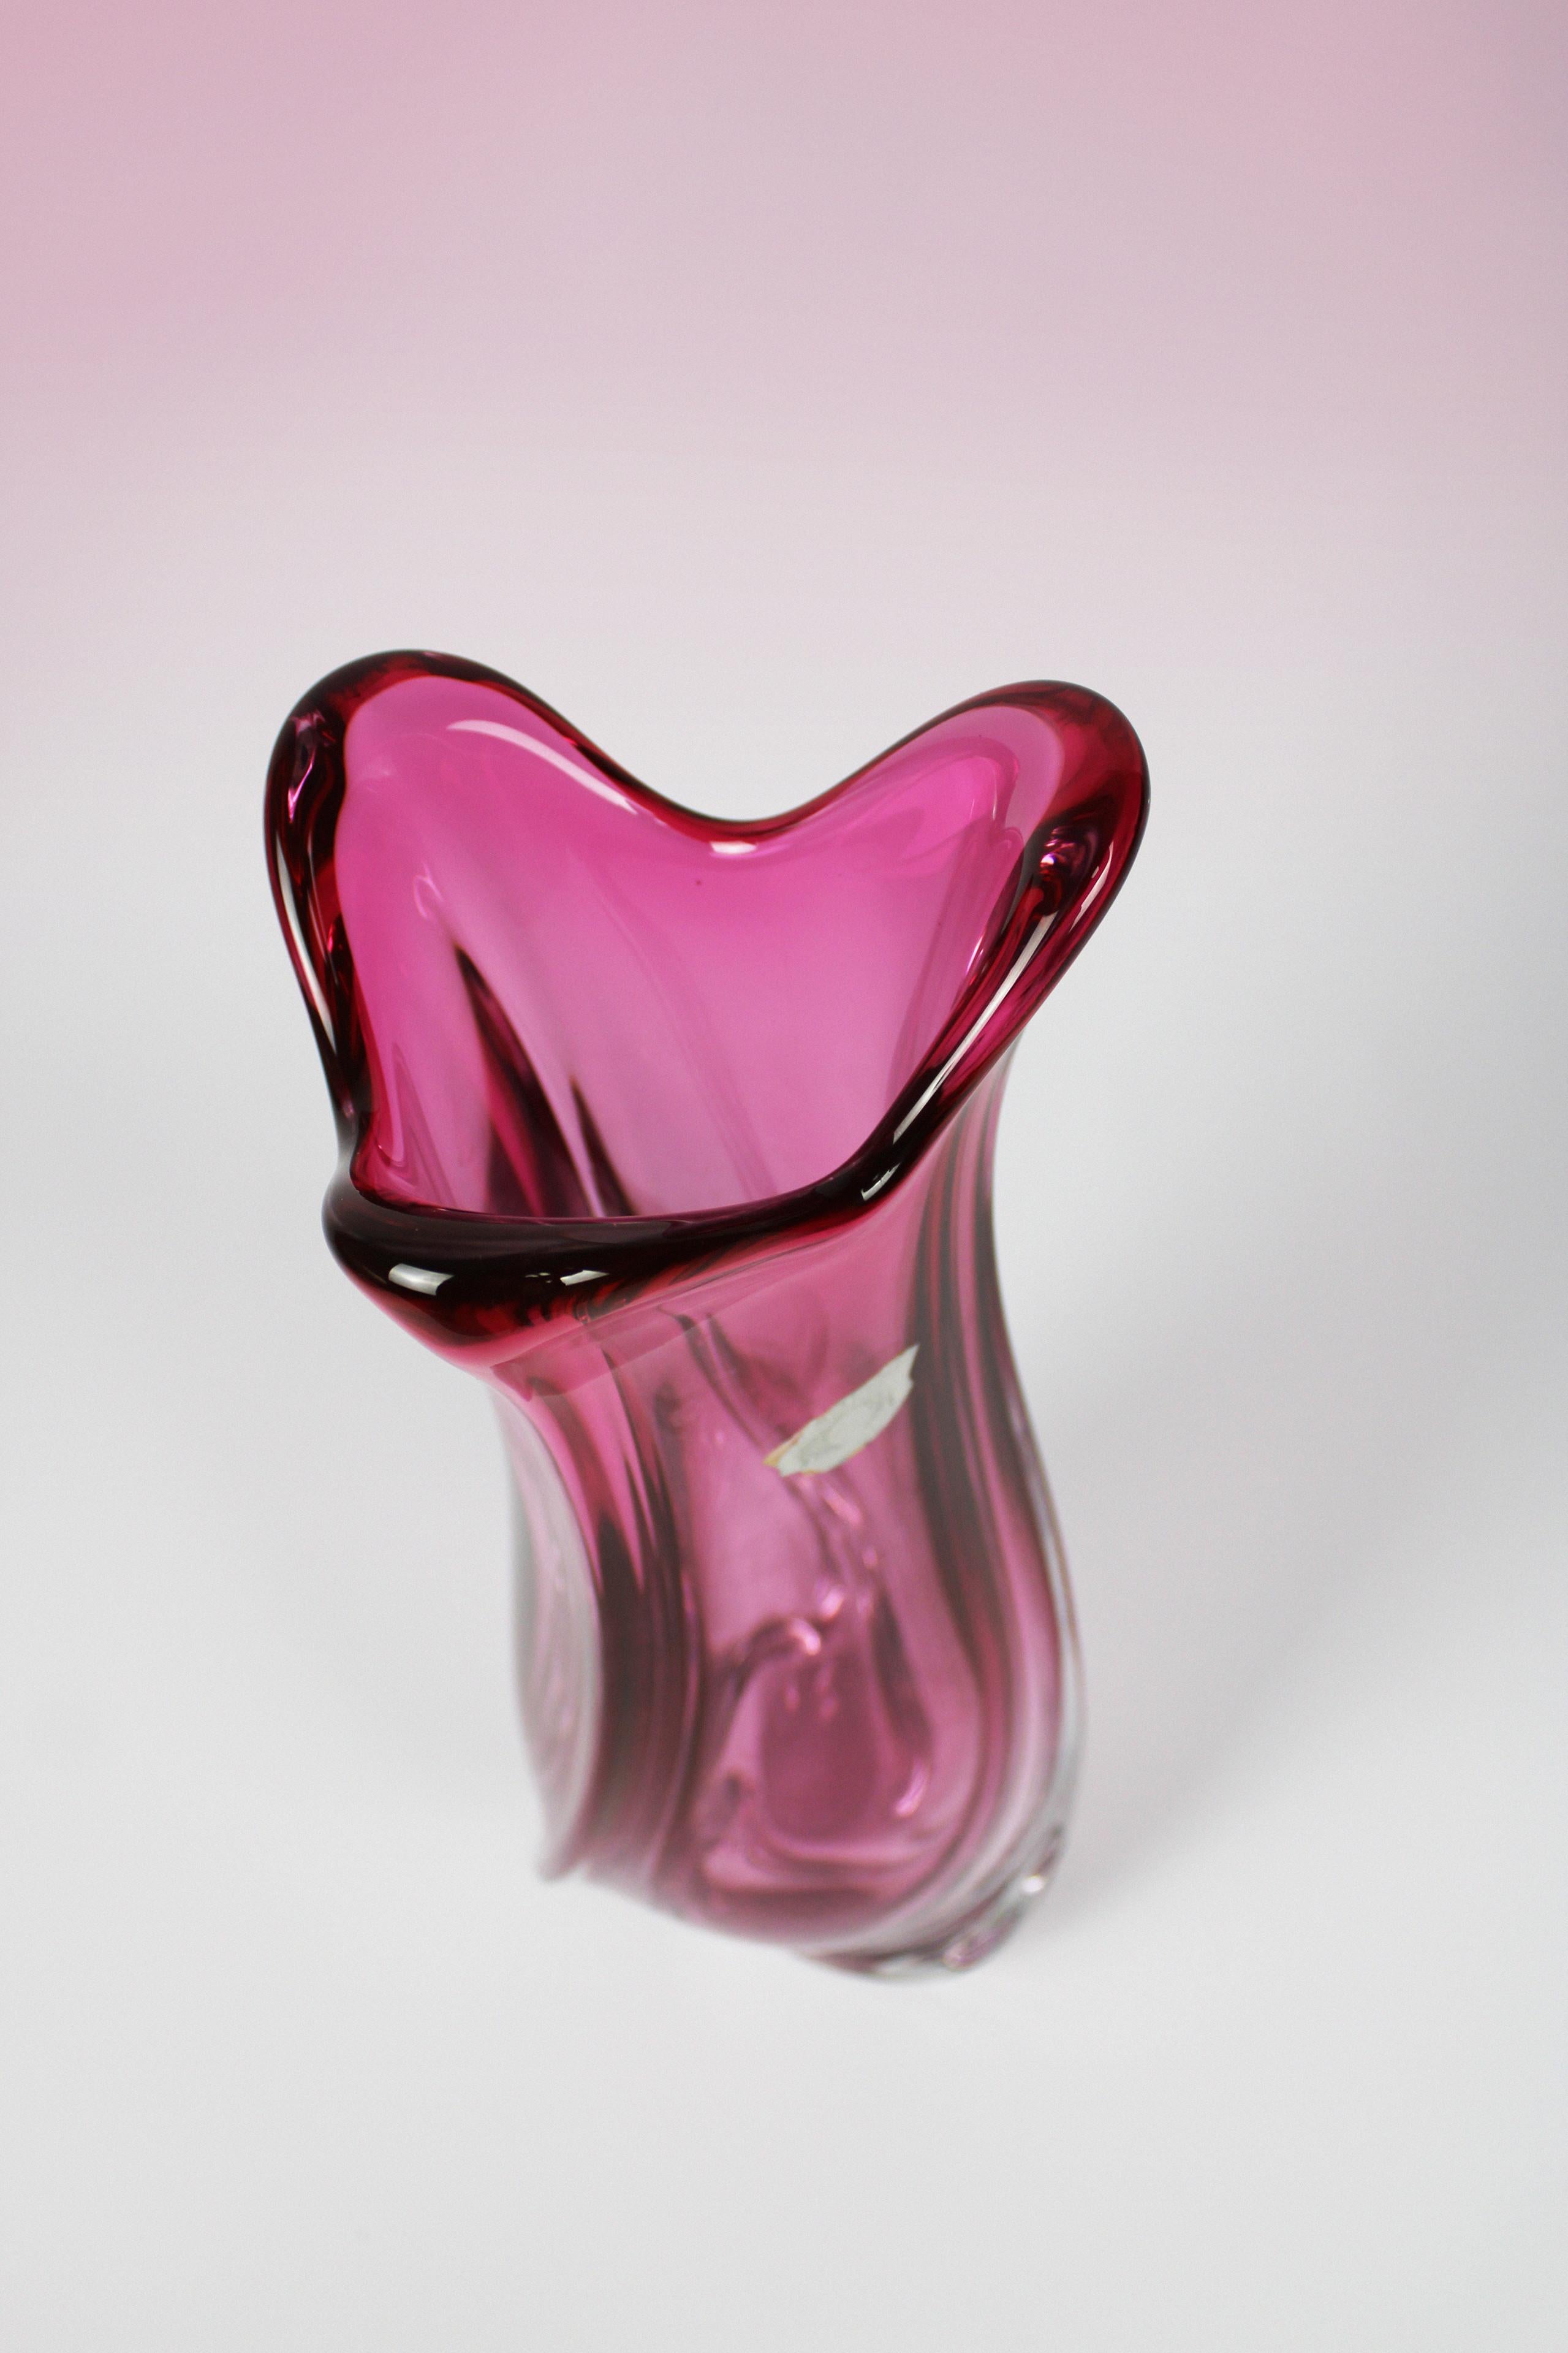 Belgian Val St Lambert Vase Art Crystal Glass Pink Vintage Art Deco 1950's Belgium For Sale